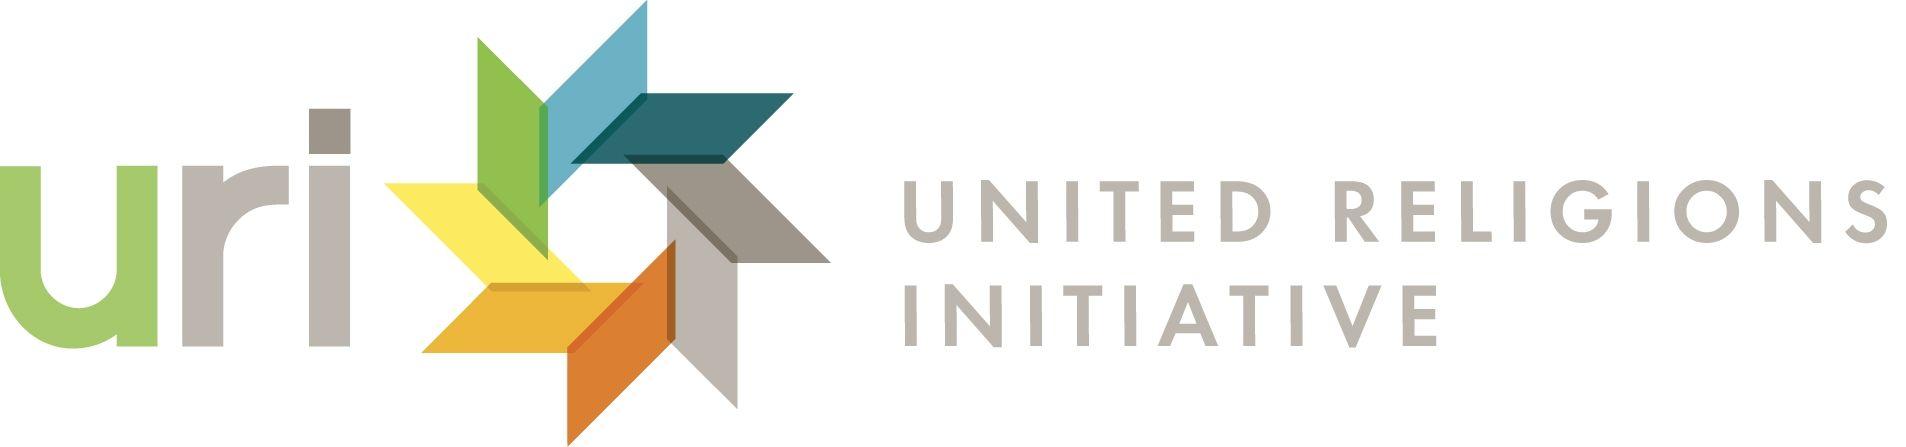 Uri Logo - URI logo | Peacemakers